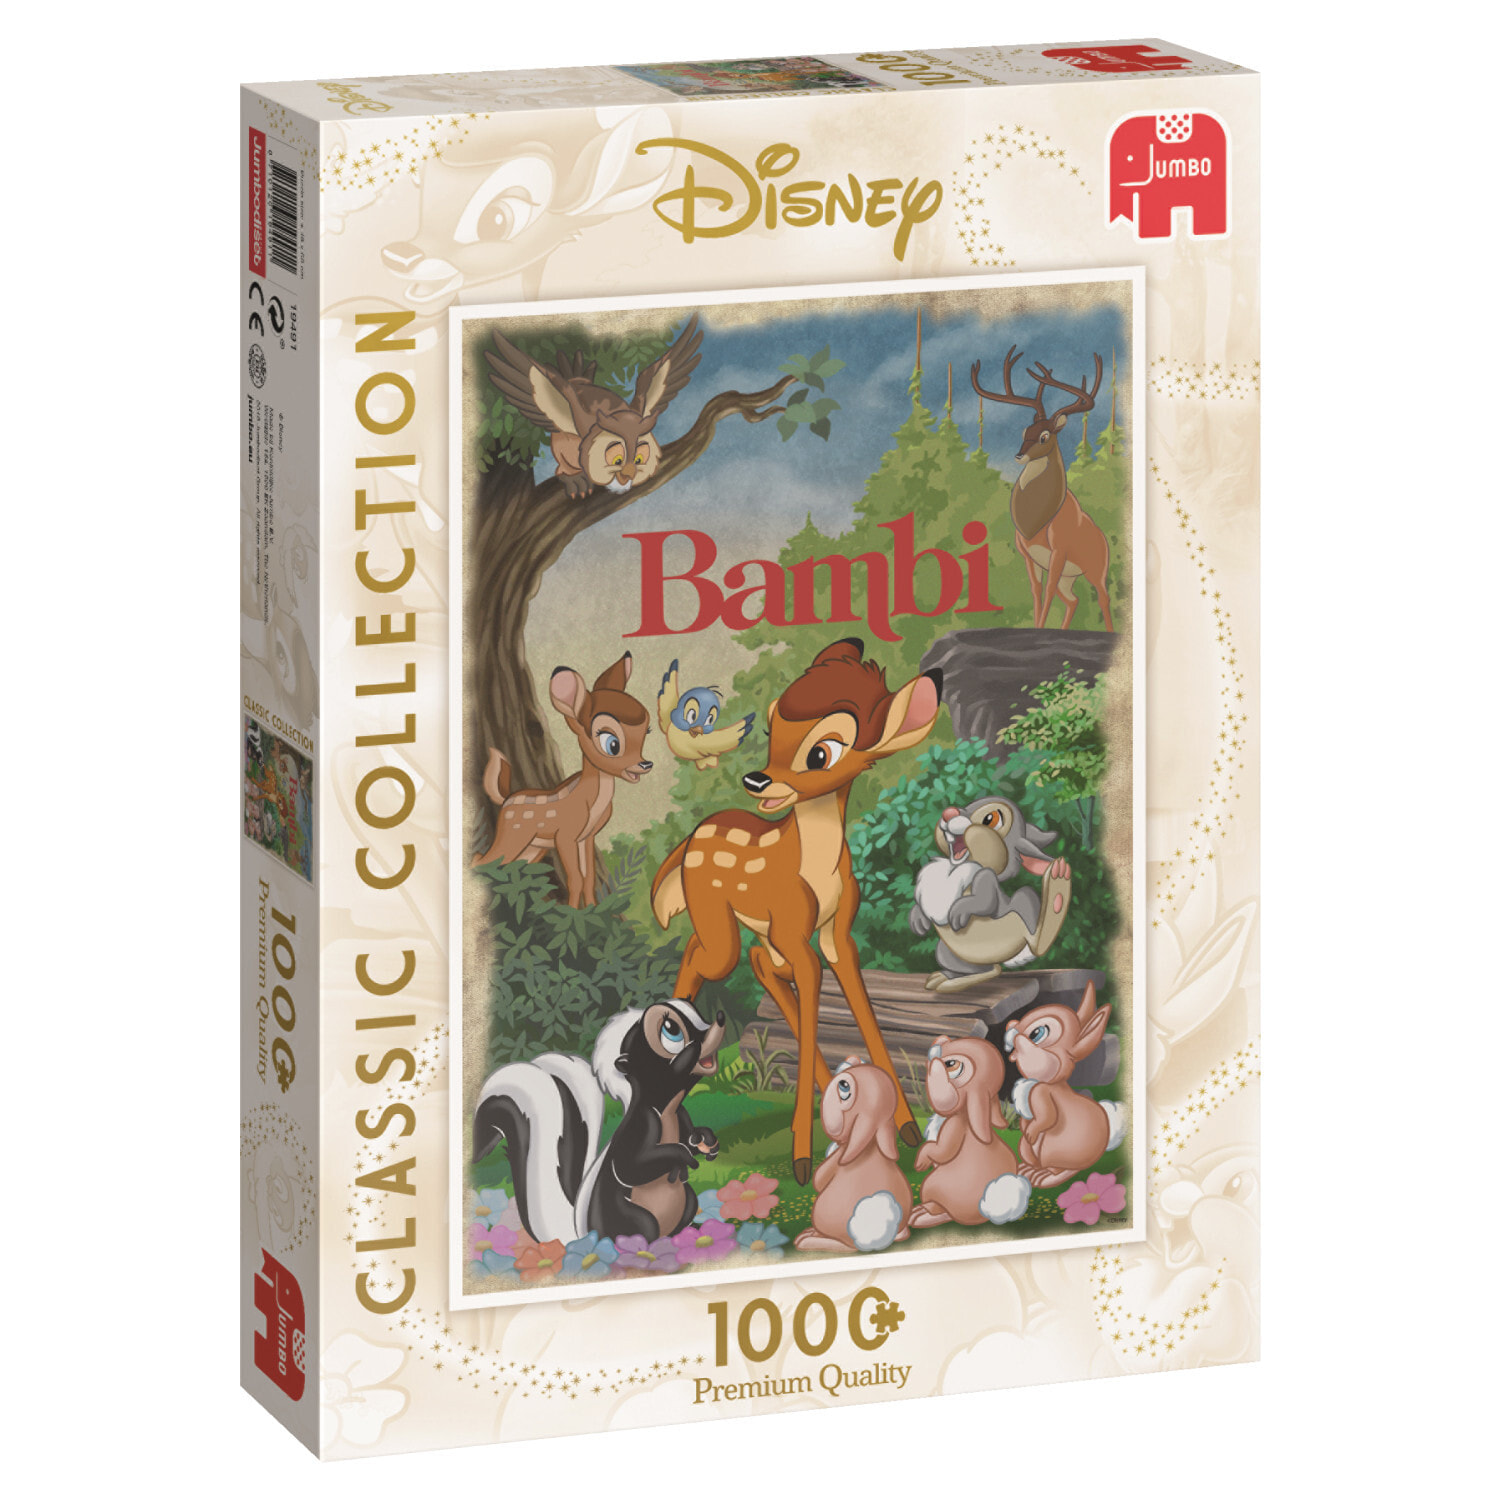 Disney Bambi Movie Poster 1000 pcs Составная картинка-головоломка 1000 шт 19491